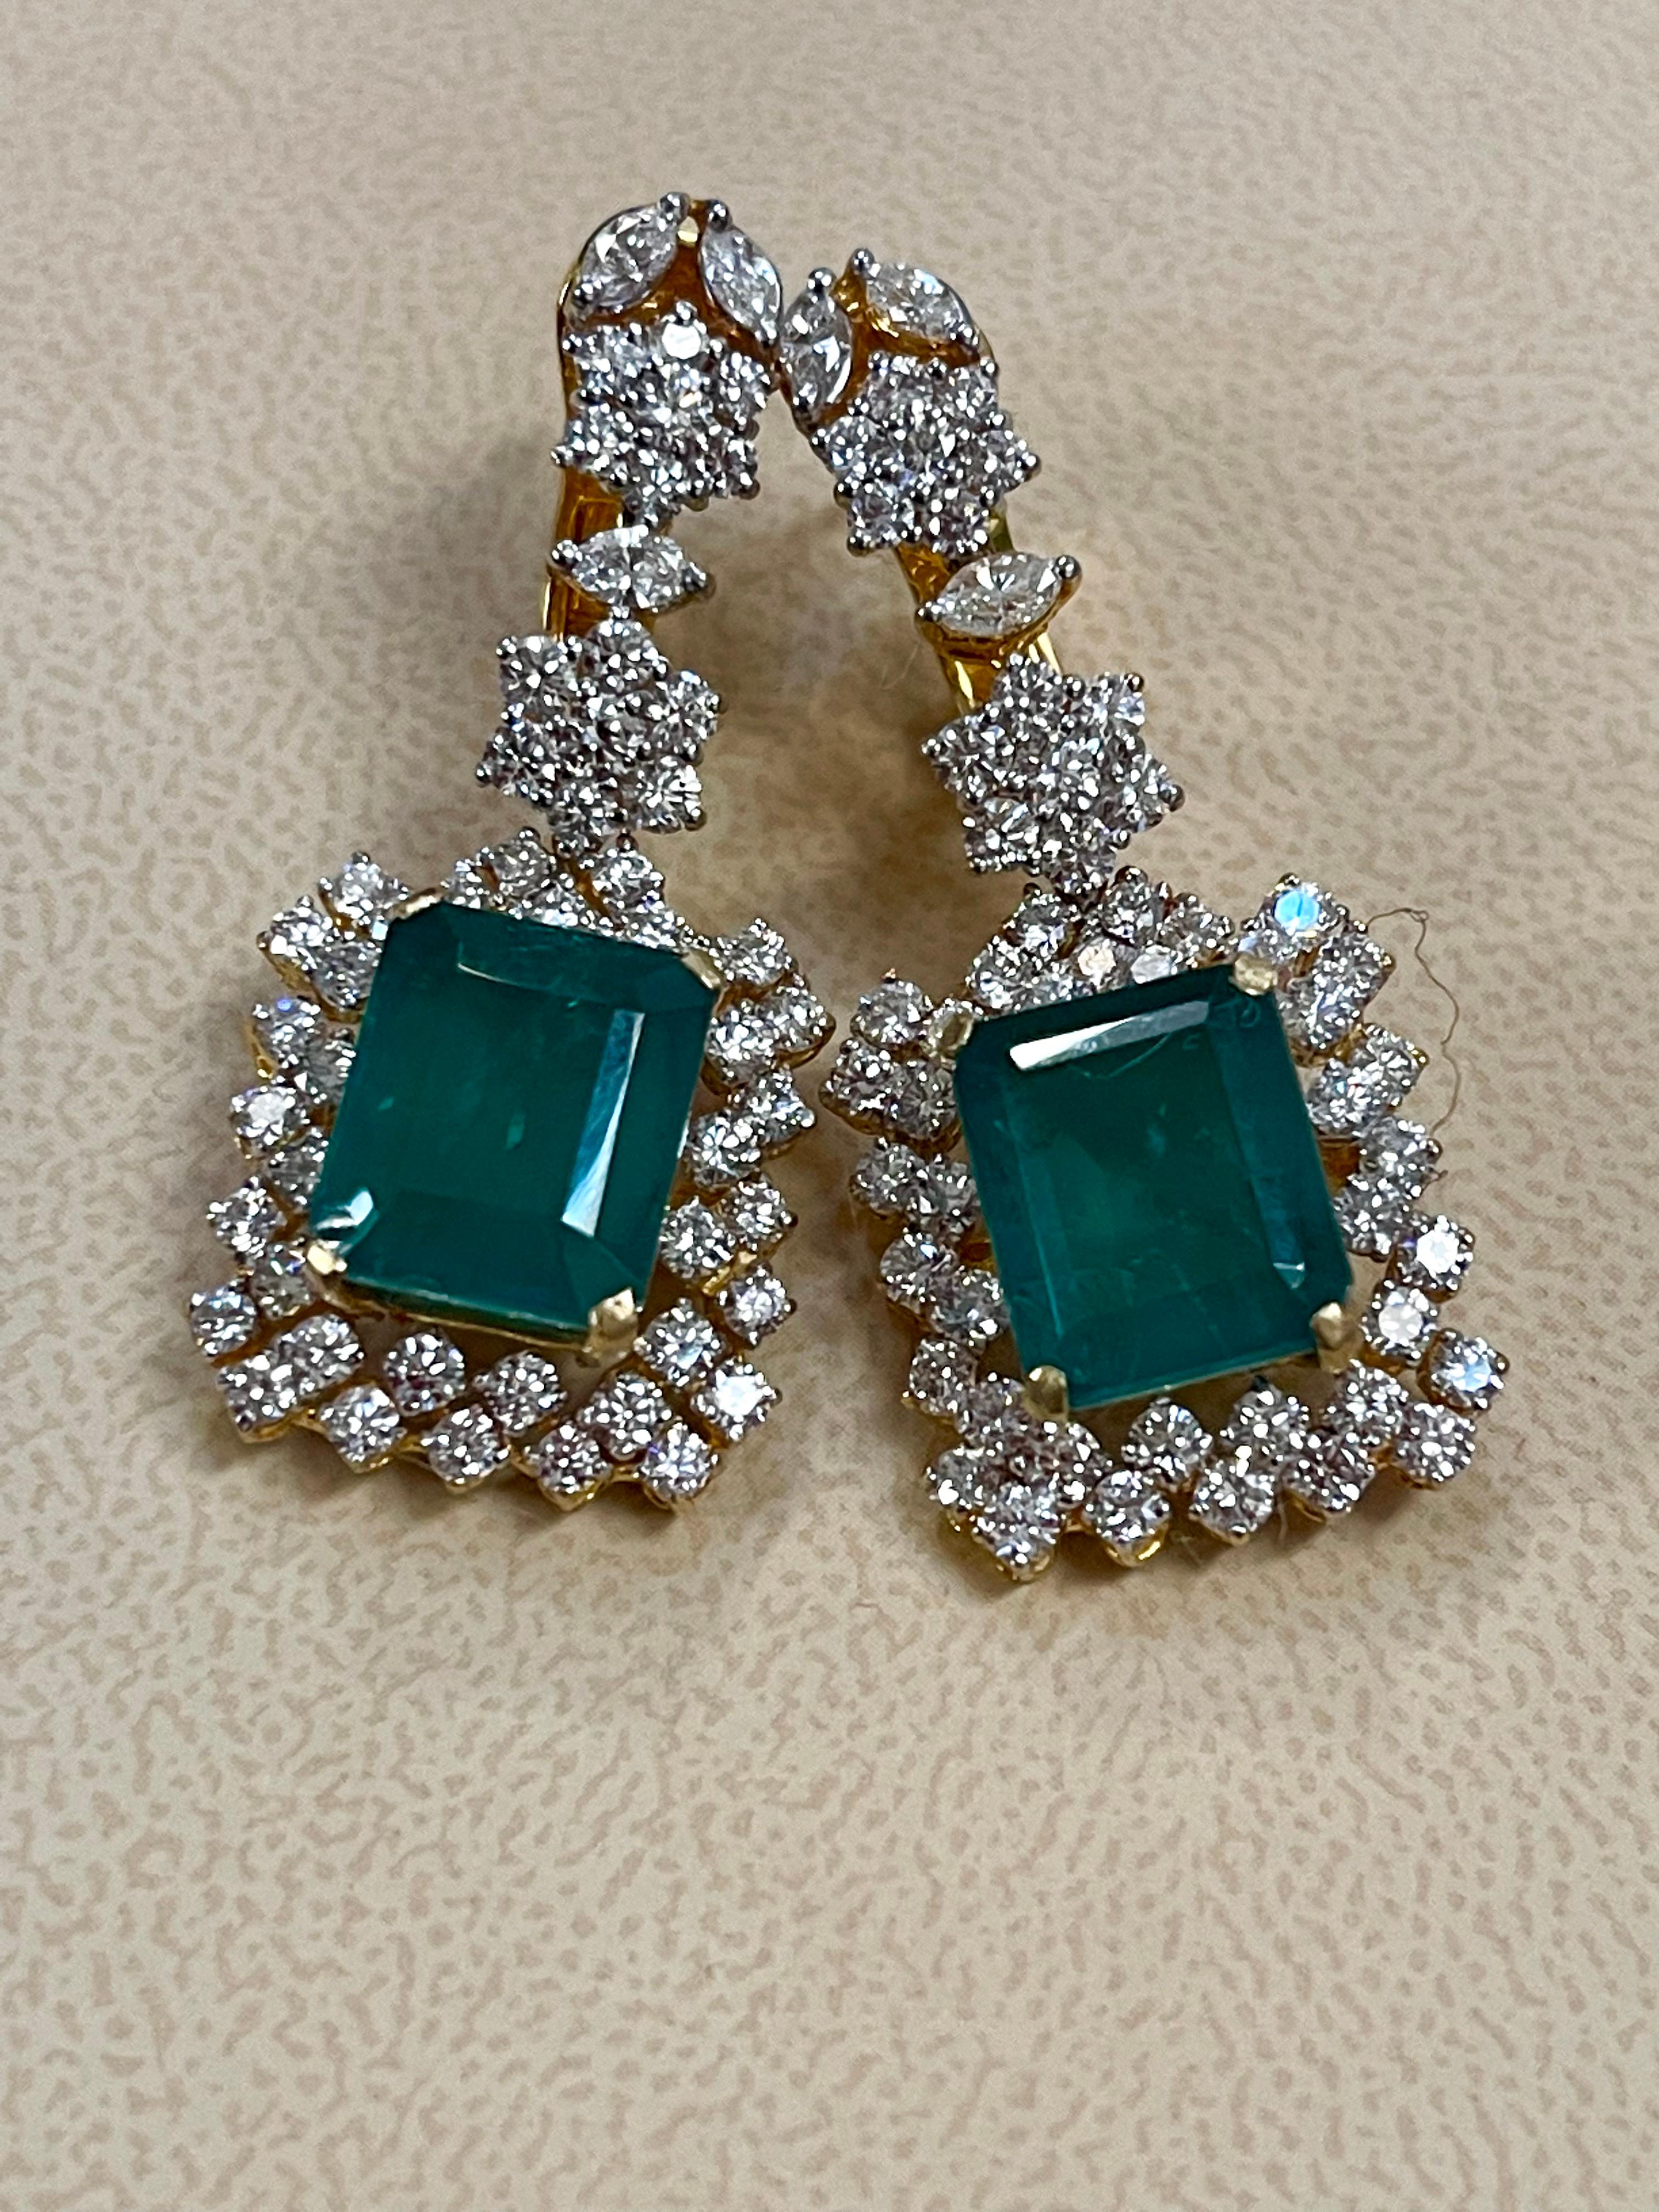 Hydro Emerald Cut Emerald, 7Ct VS Diamond Dangle/Drop Earrings 18 Kt Gold For Sale 4